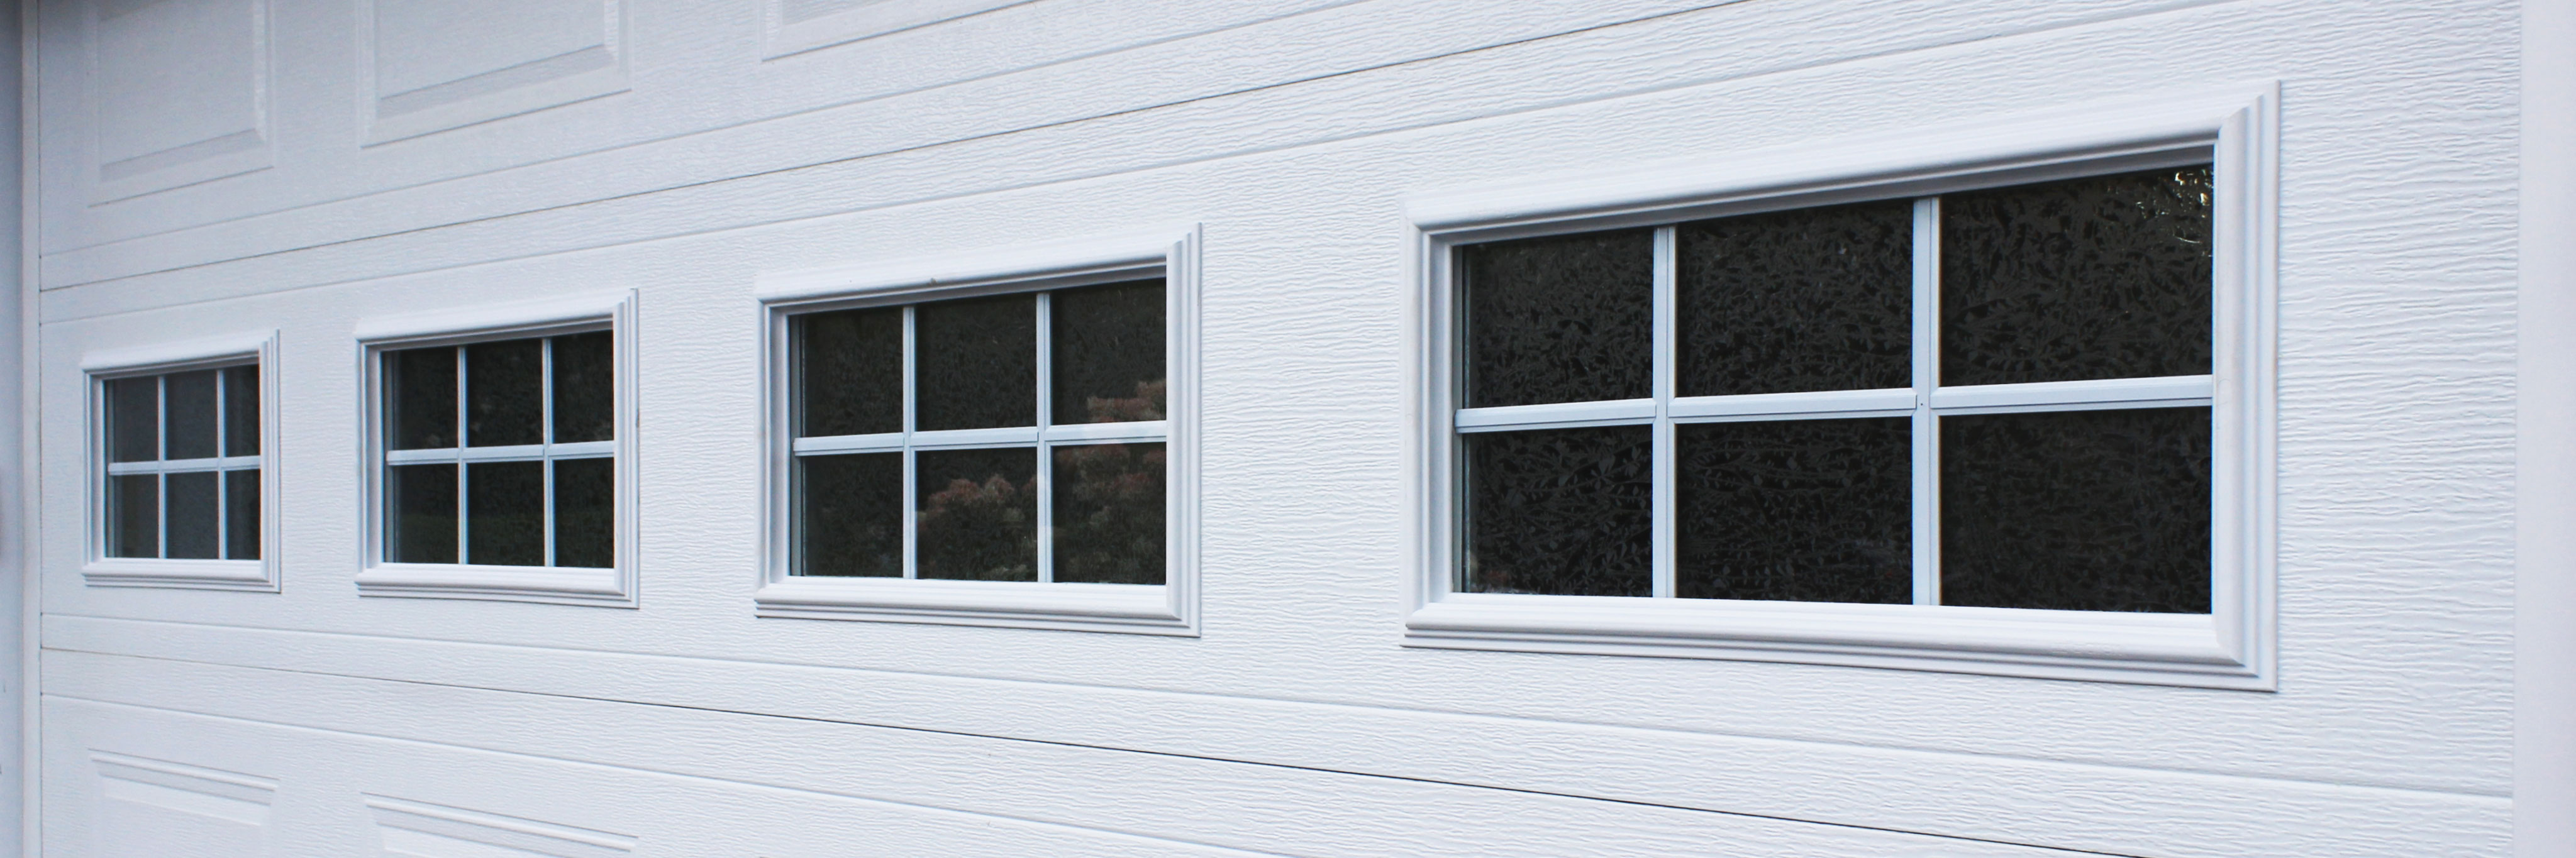 6 Steps To Add Thermal Windows To Your Garage Door • Garex